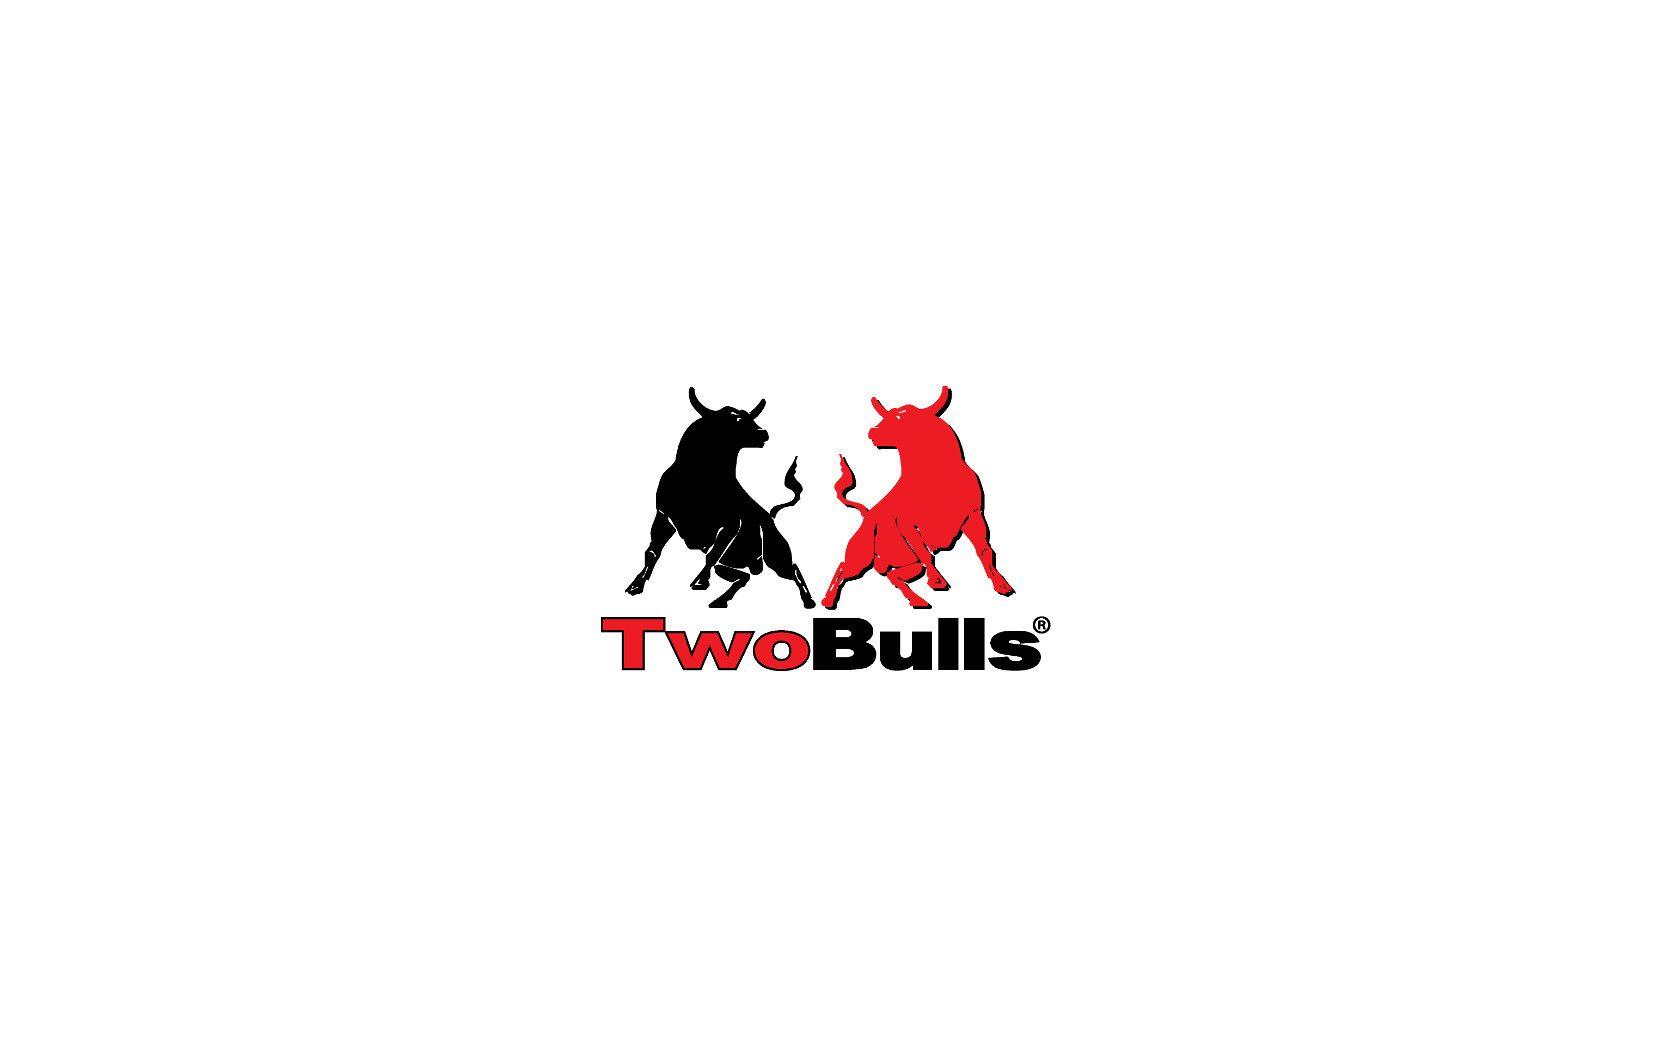 Two Bulls Logo - TwoBulls. TwoBulls Black Label 17